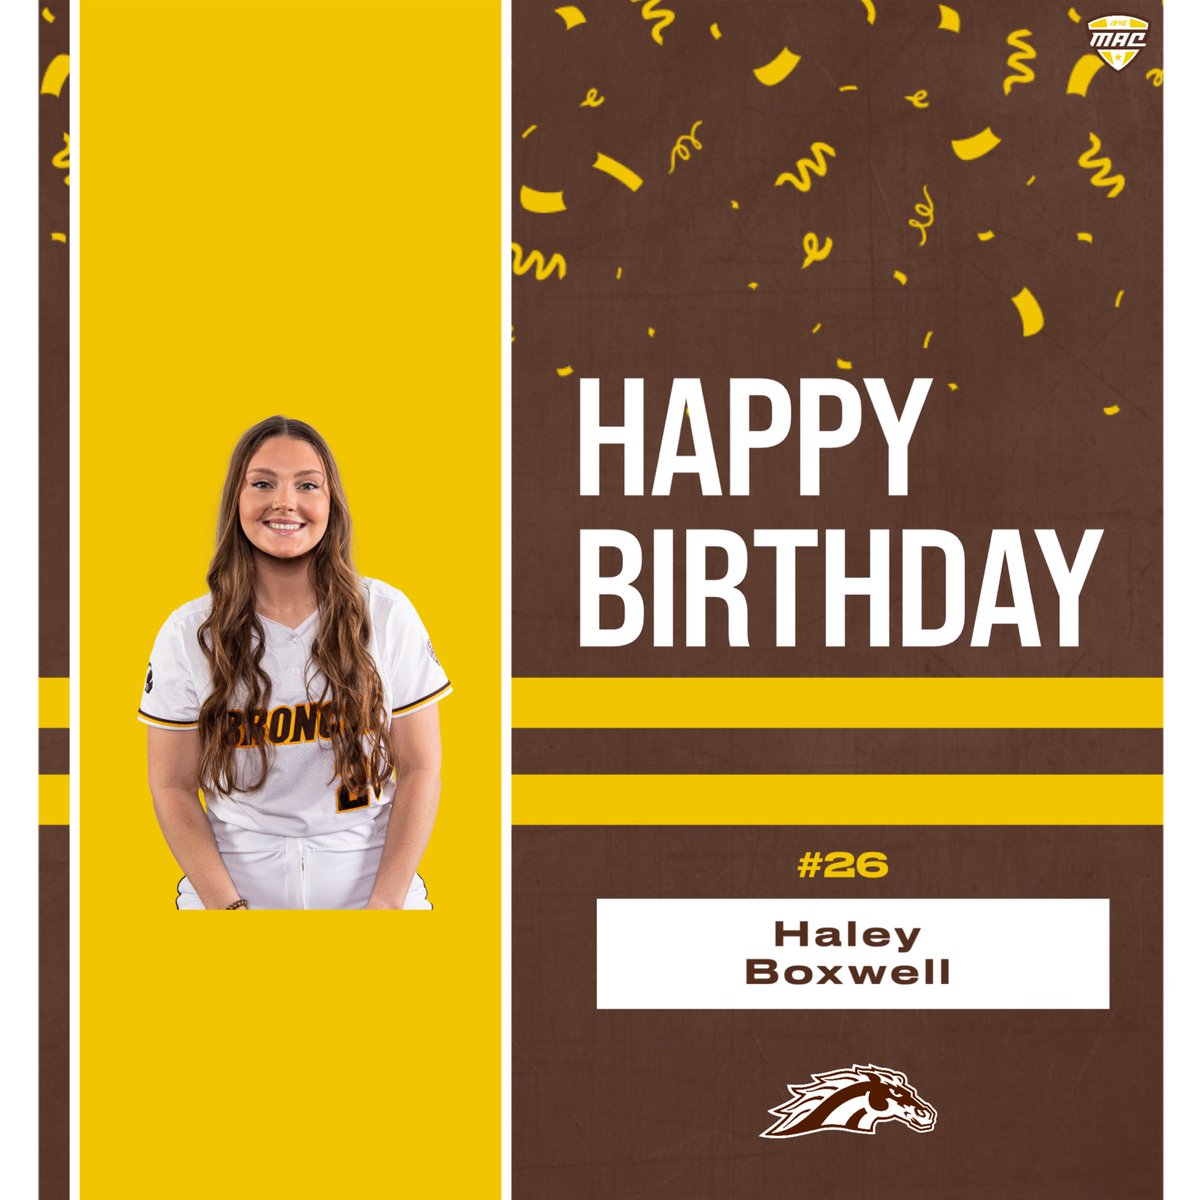 Happy birthday, Haley!🥳